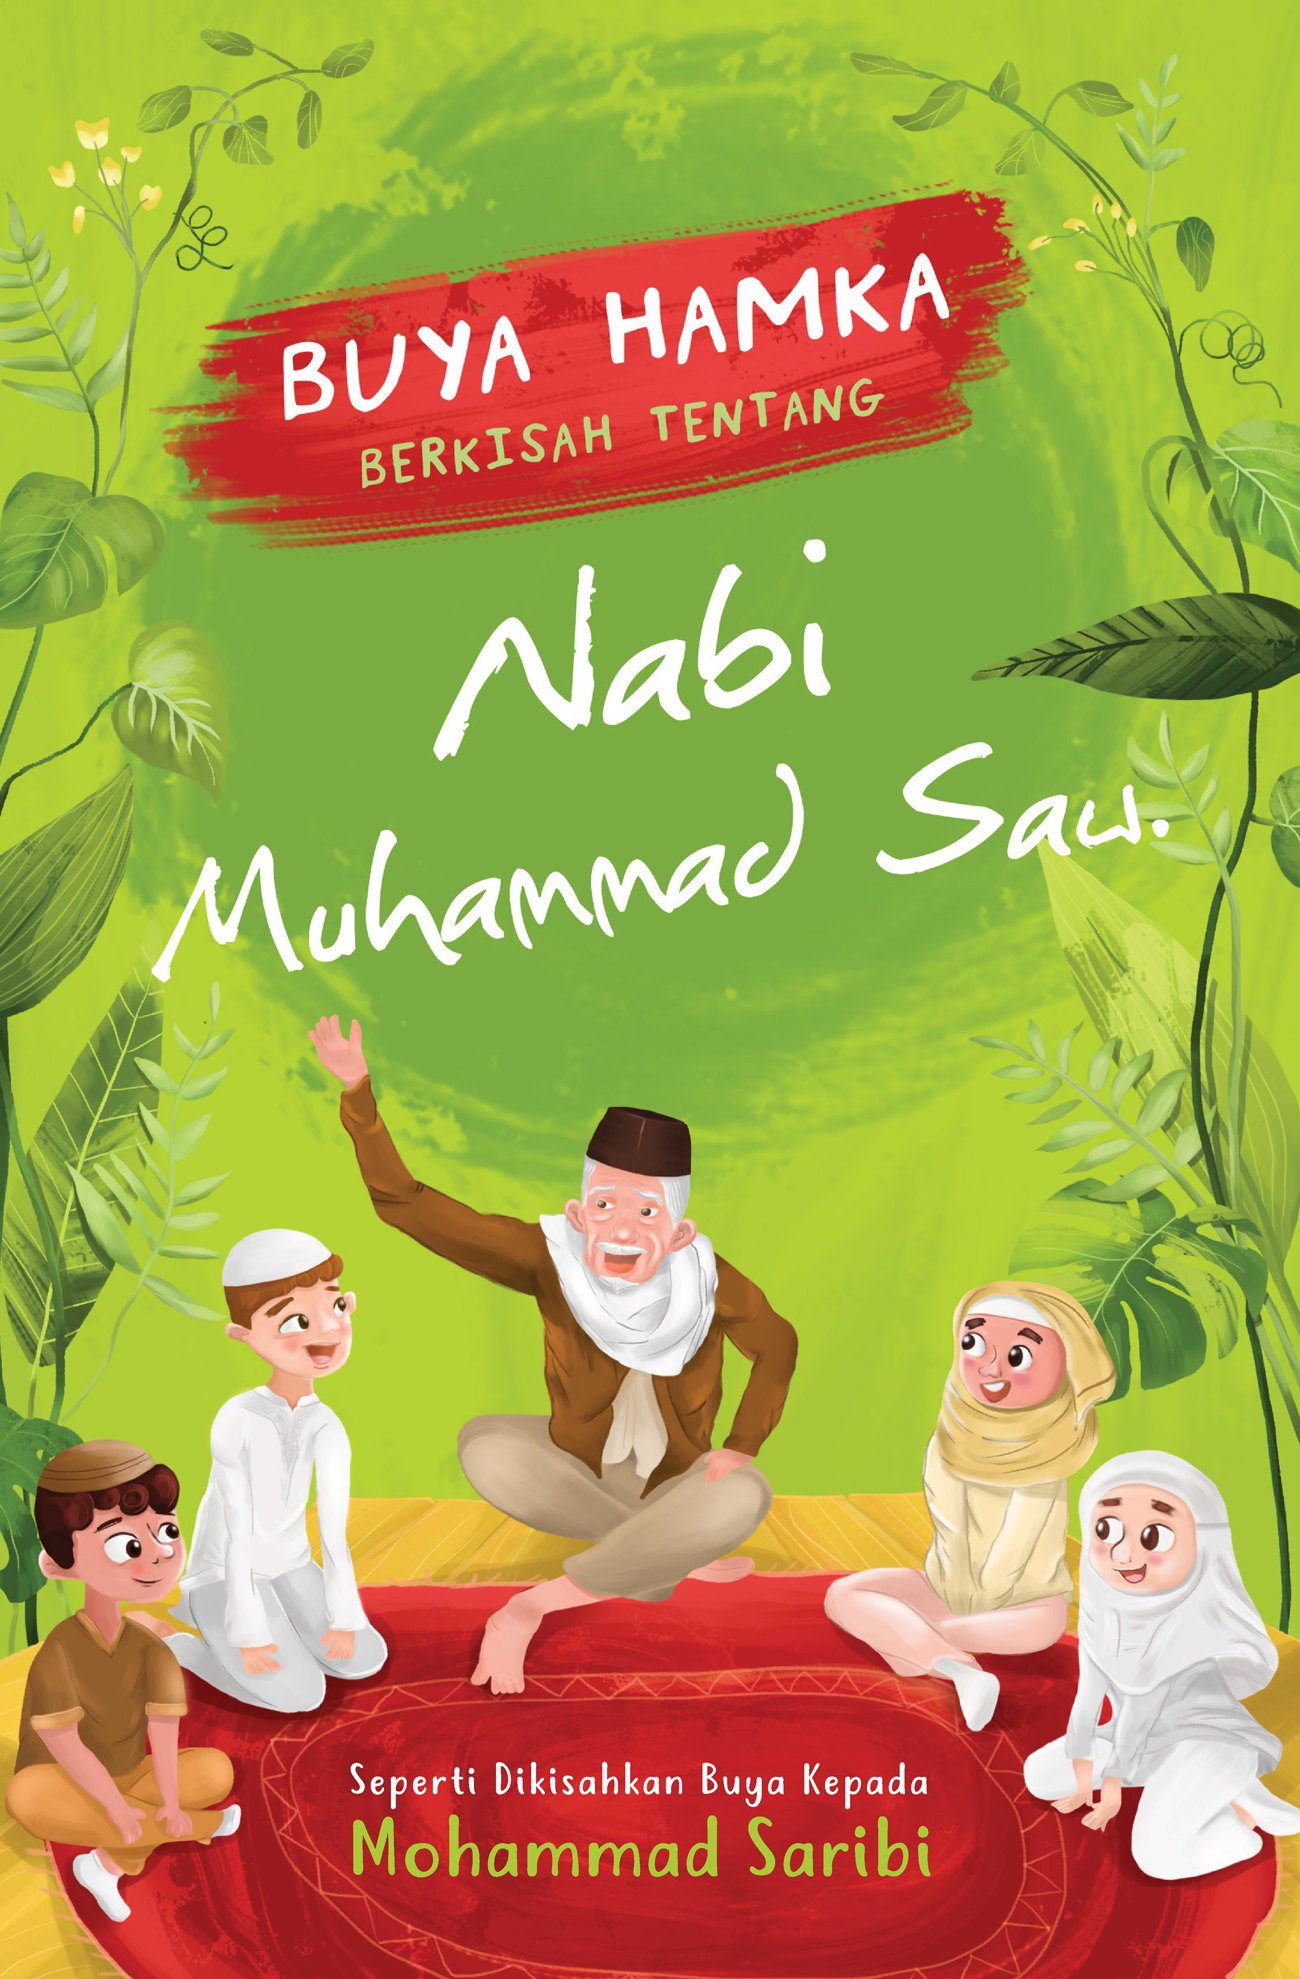 Buku Anak-Buya Hamka Berkisah tentang Nabi Muhammad Saw. .